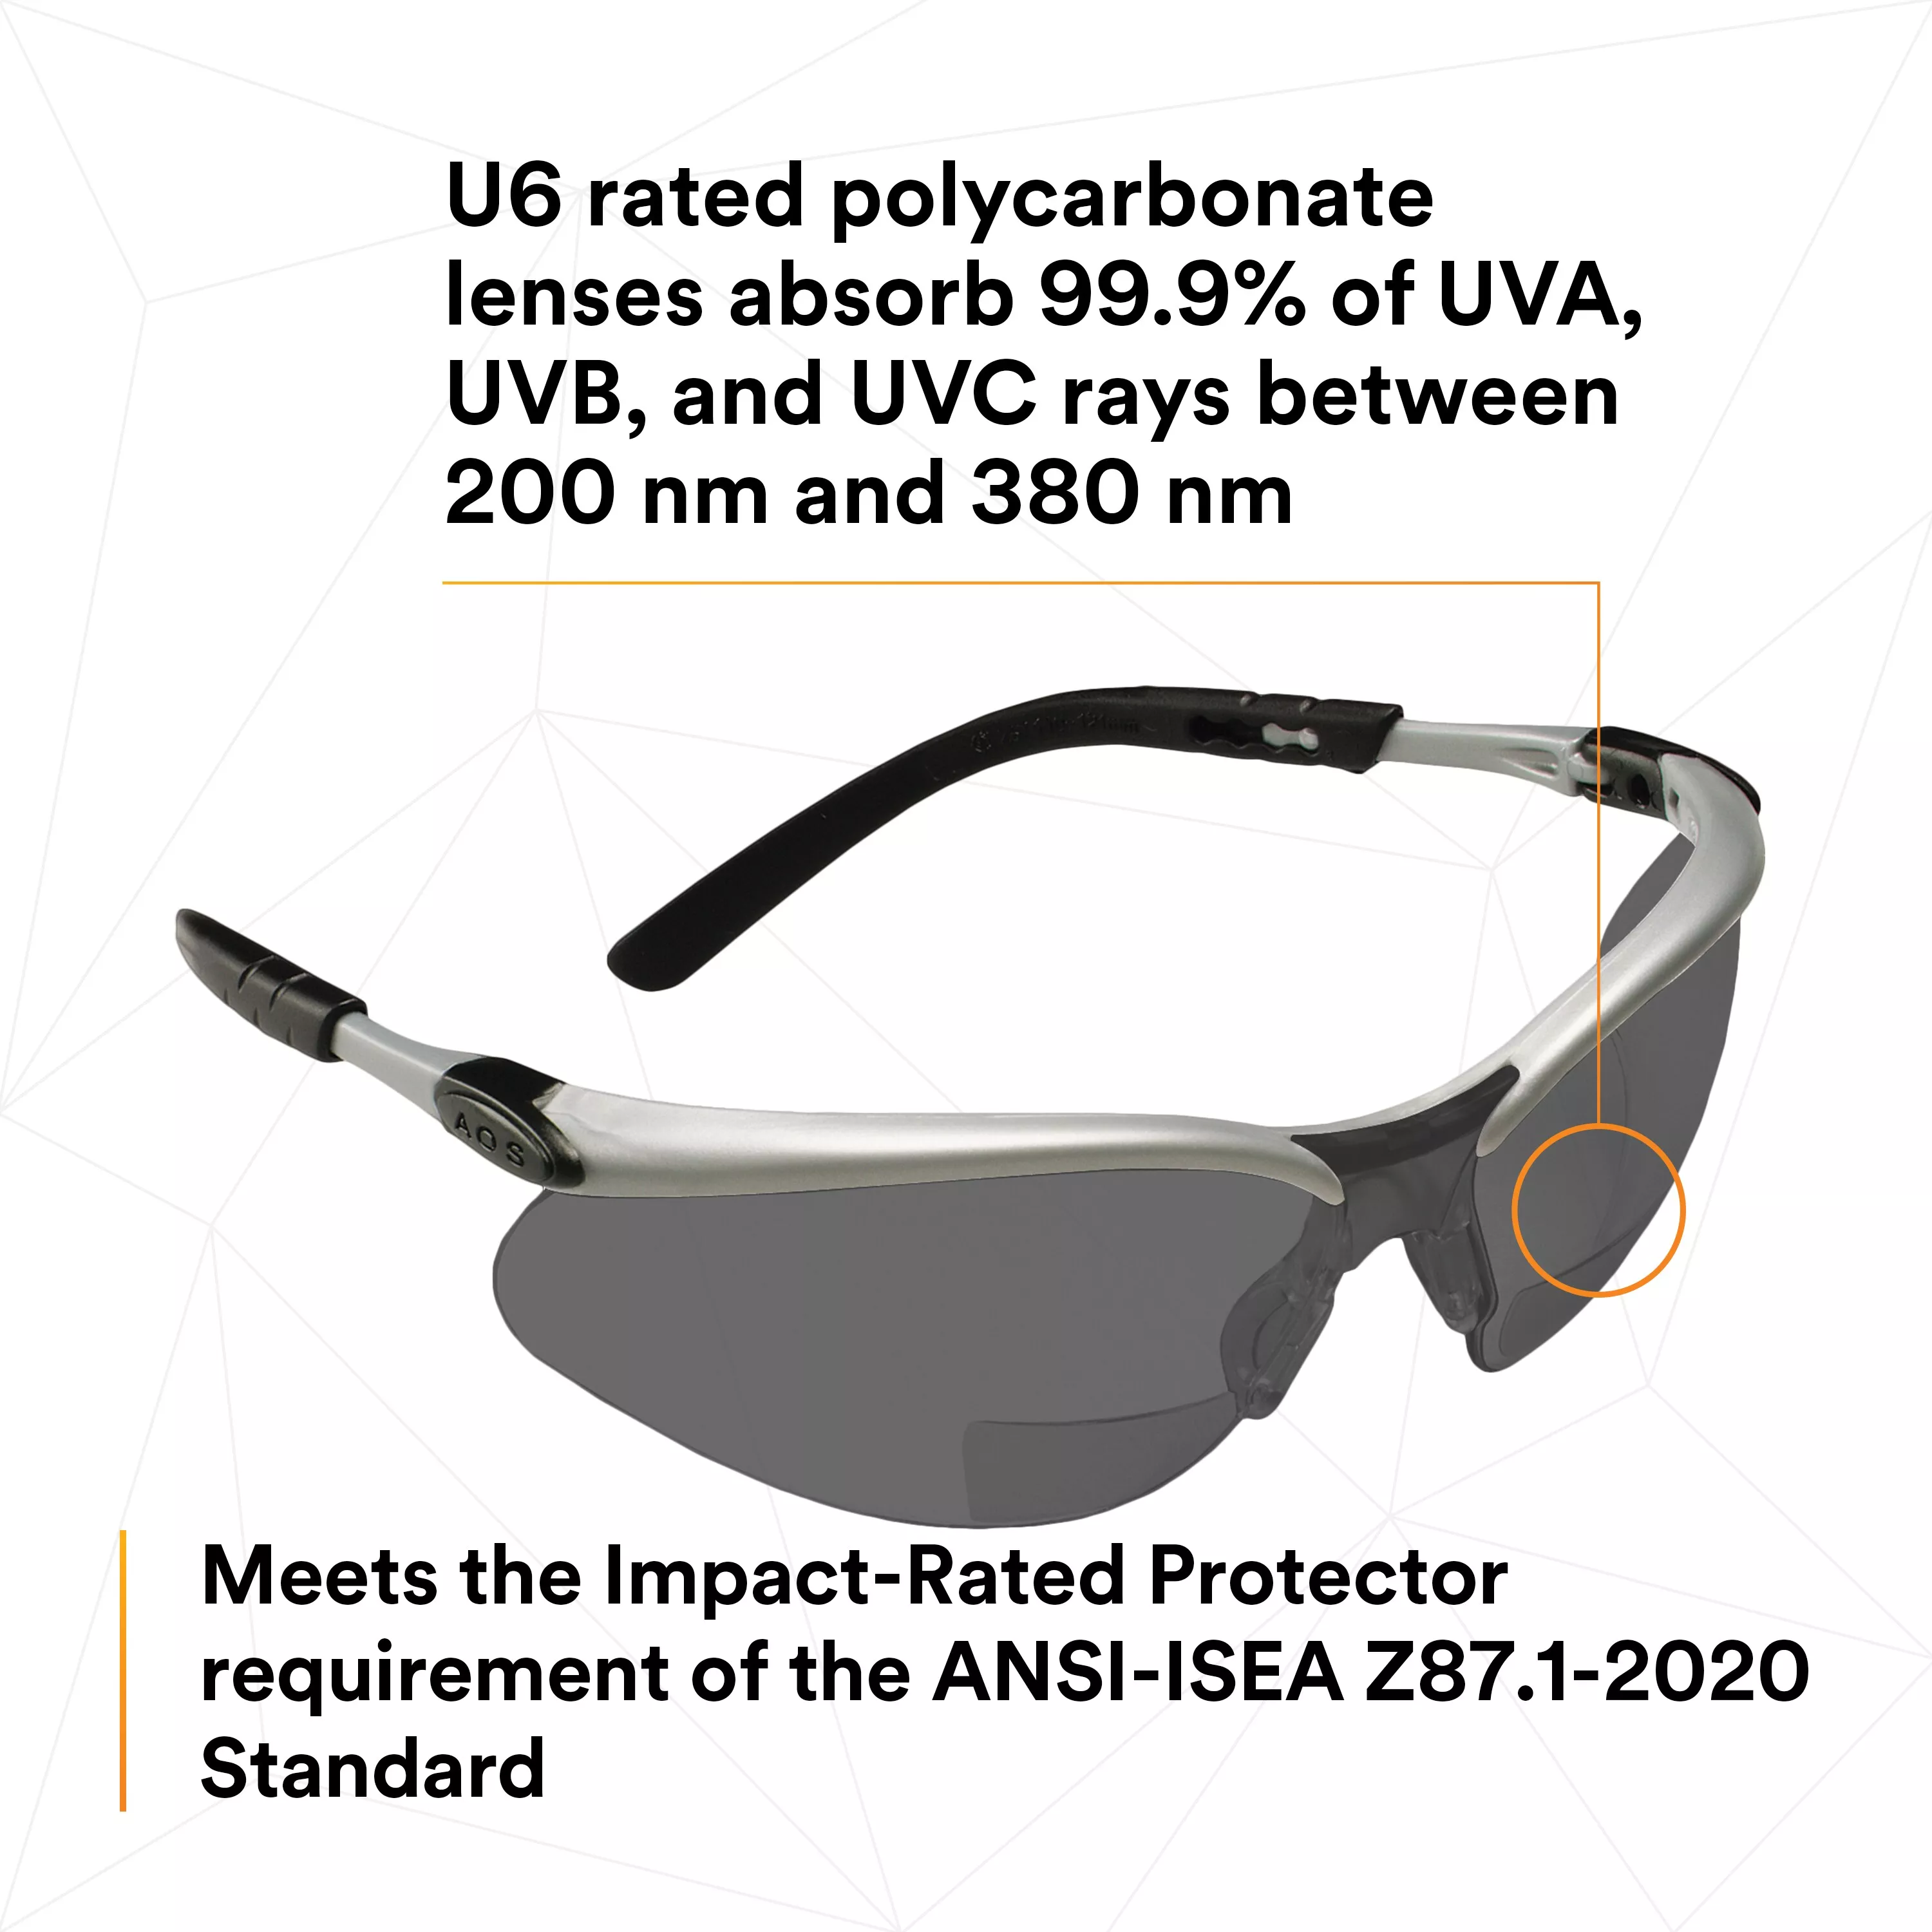 SKU 7000127493 | 3M™ BX™ Reader Protective Eyewear 11378-00000-20